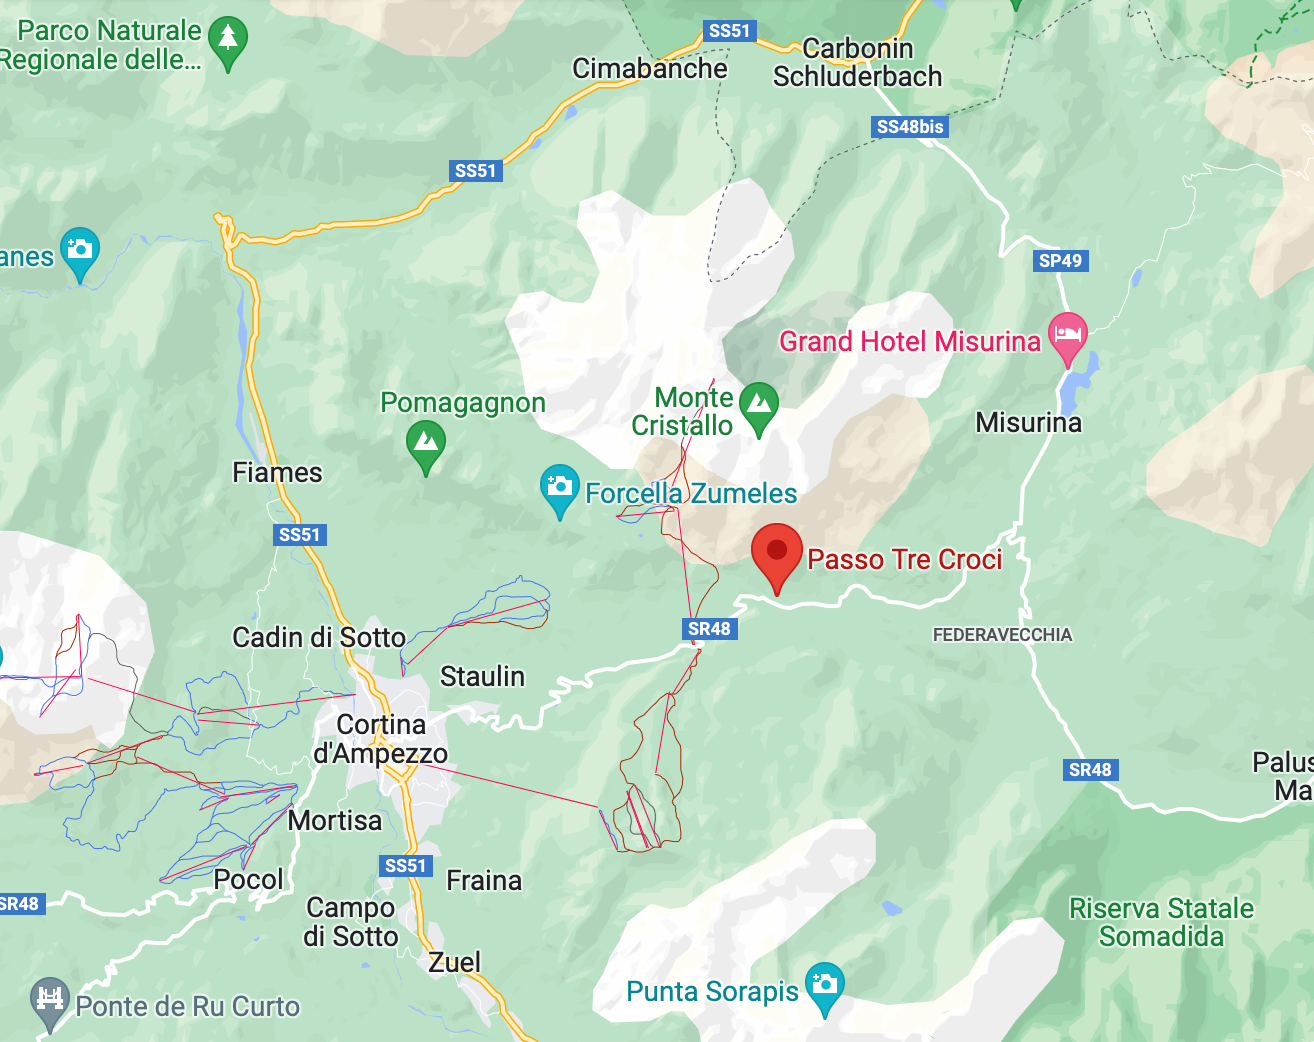 where is Lago di Sorapis in the Dolomites?